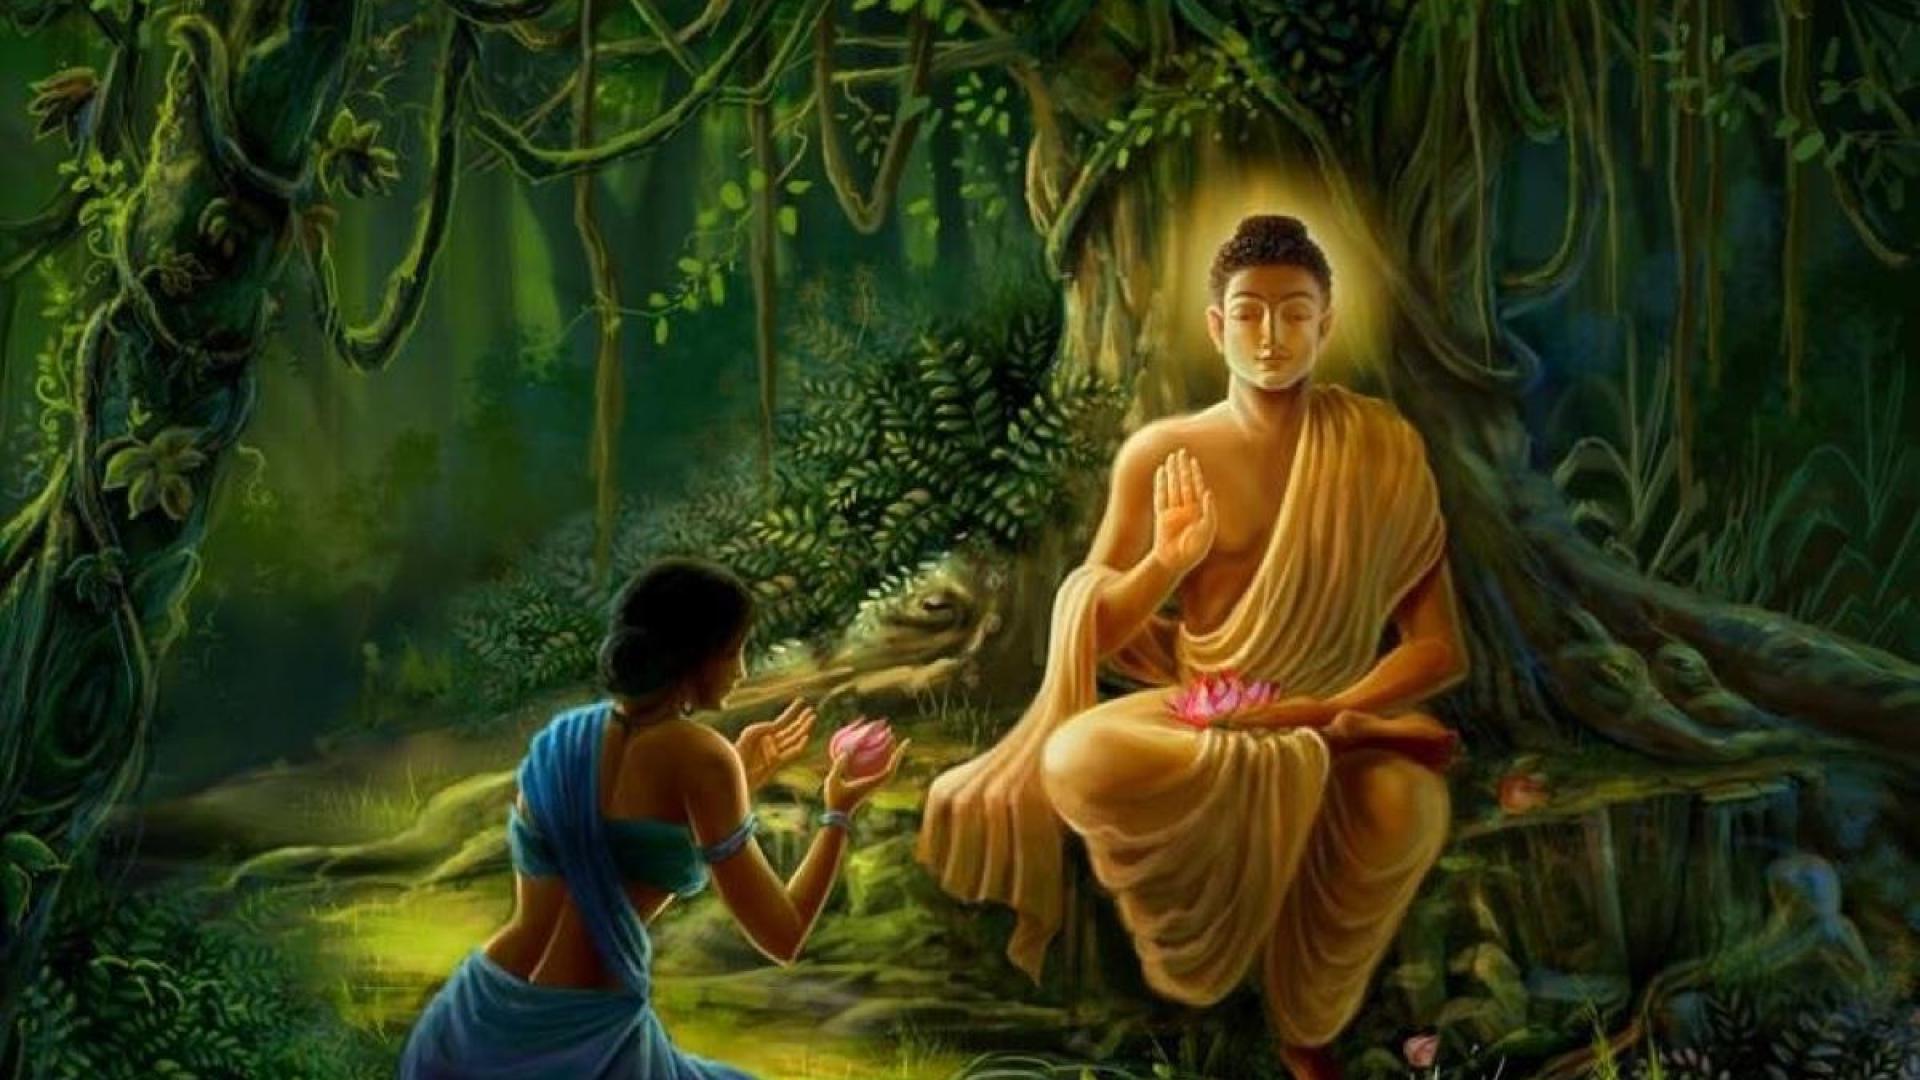 Buddha Wallpaper Hd 1080p Free Download | Hindu Gods and Goddesses